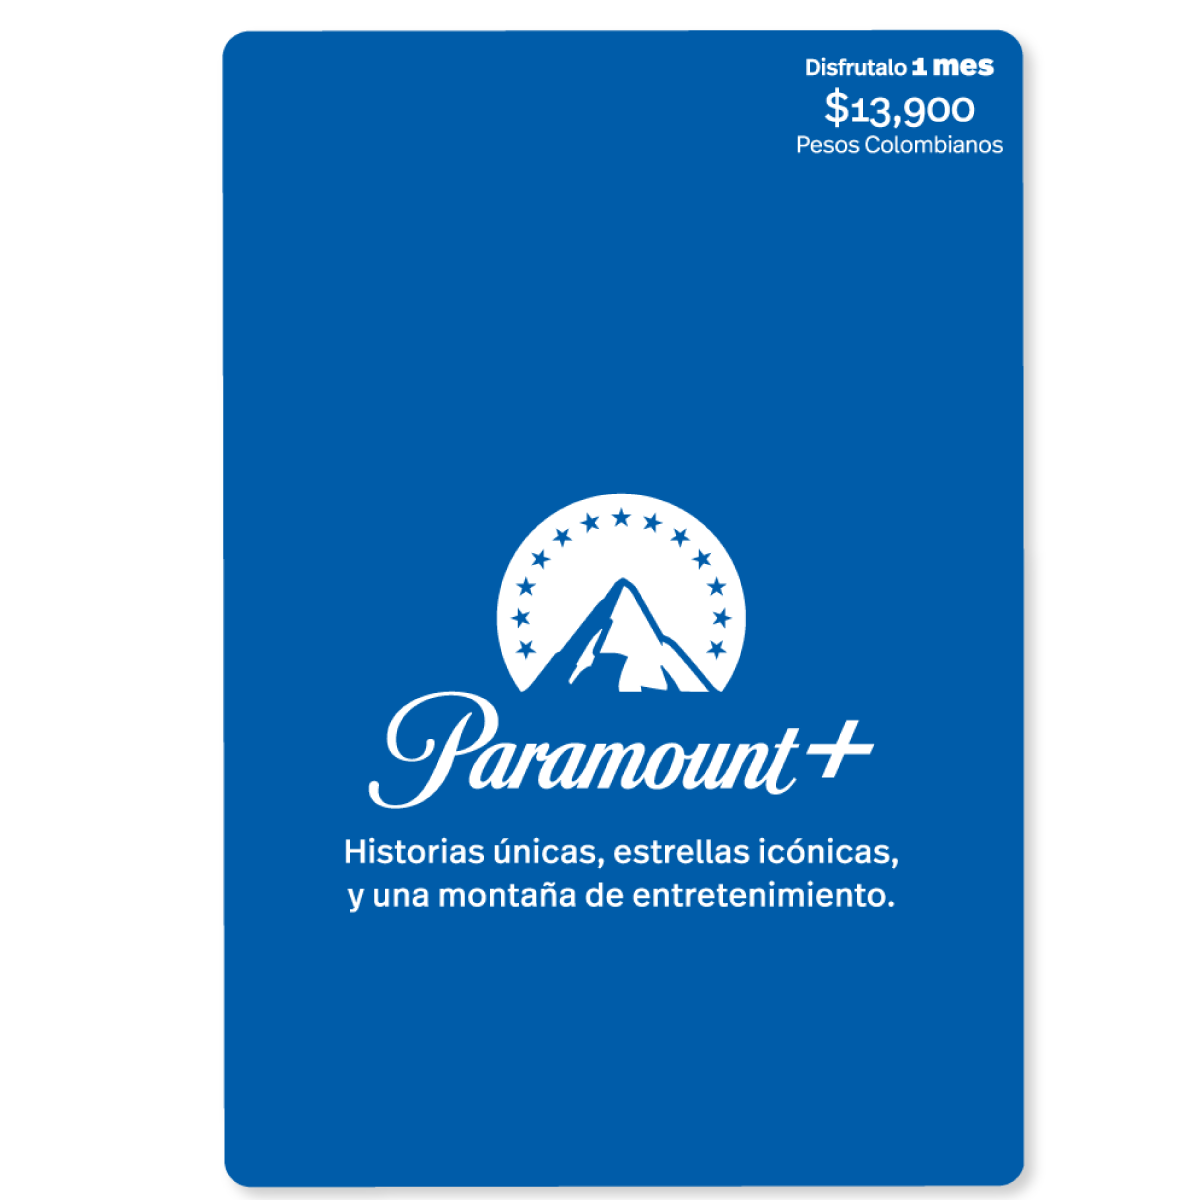 Paramount - 1 mes